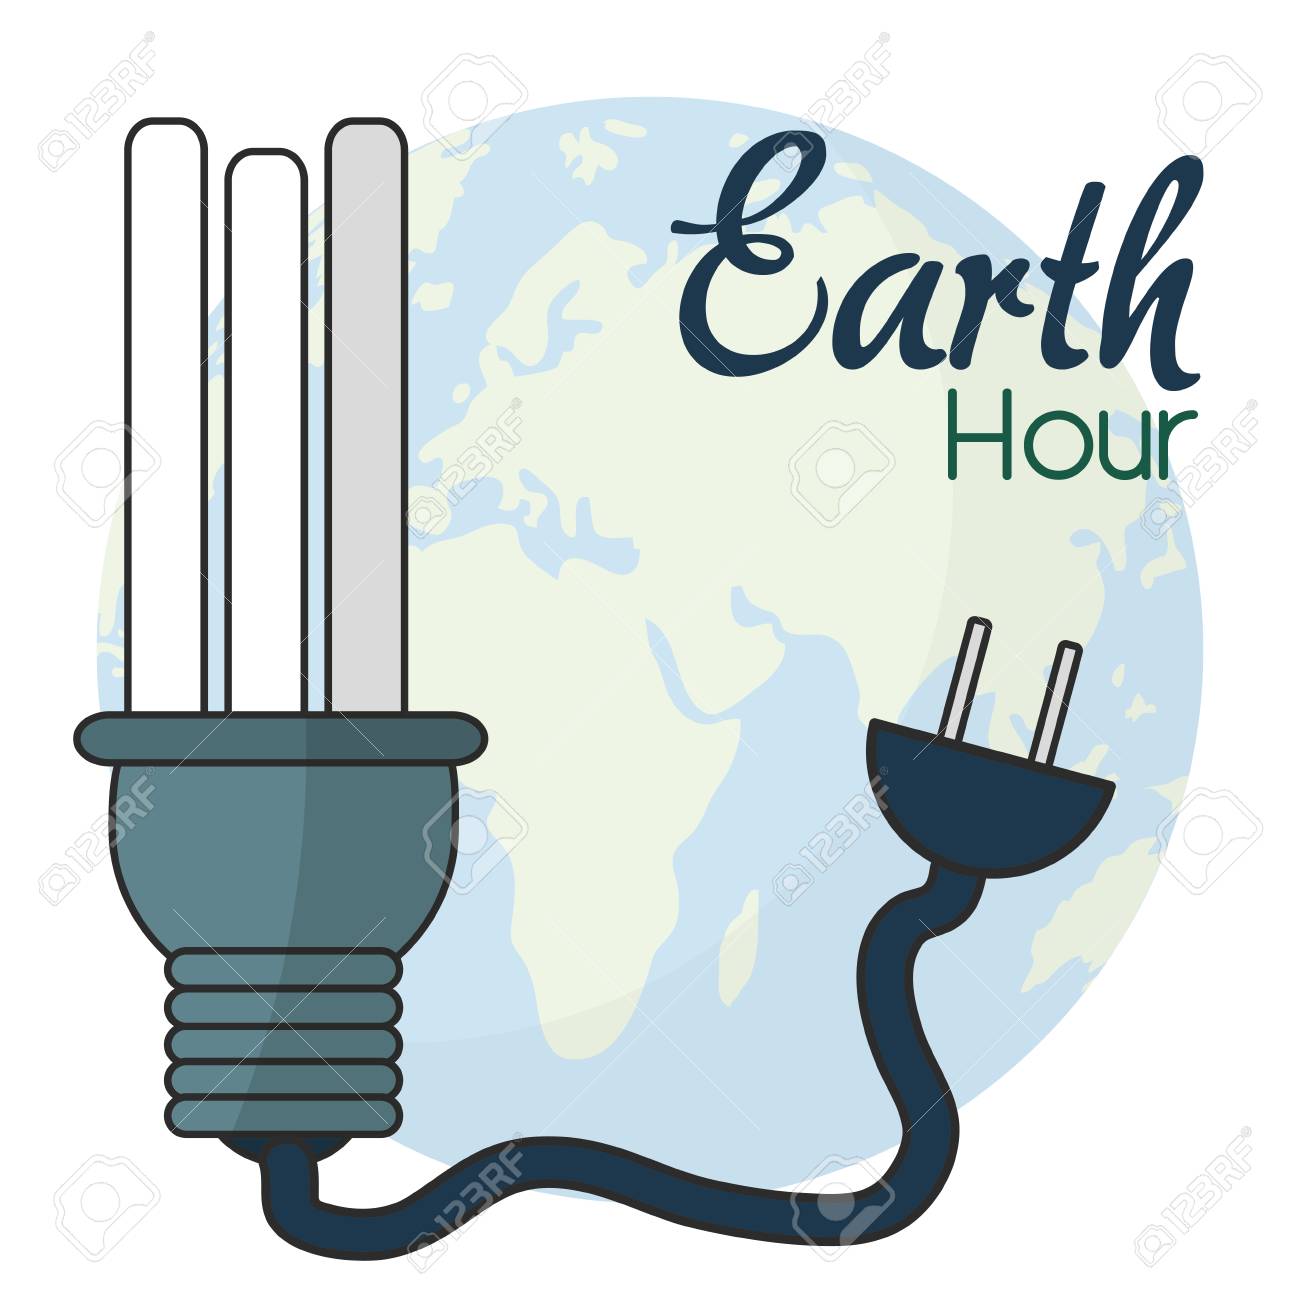 Earth hour clipart.